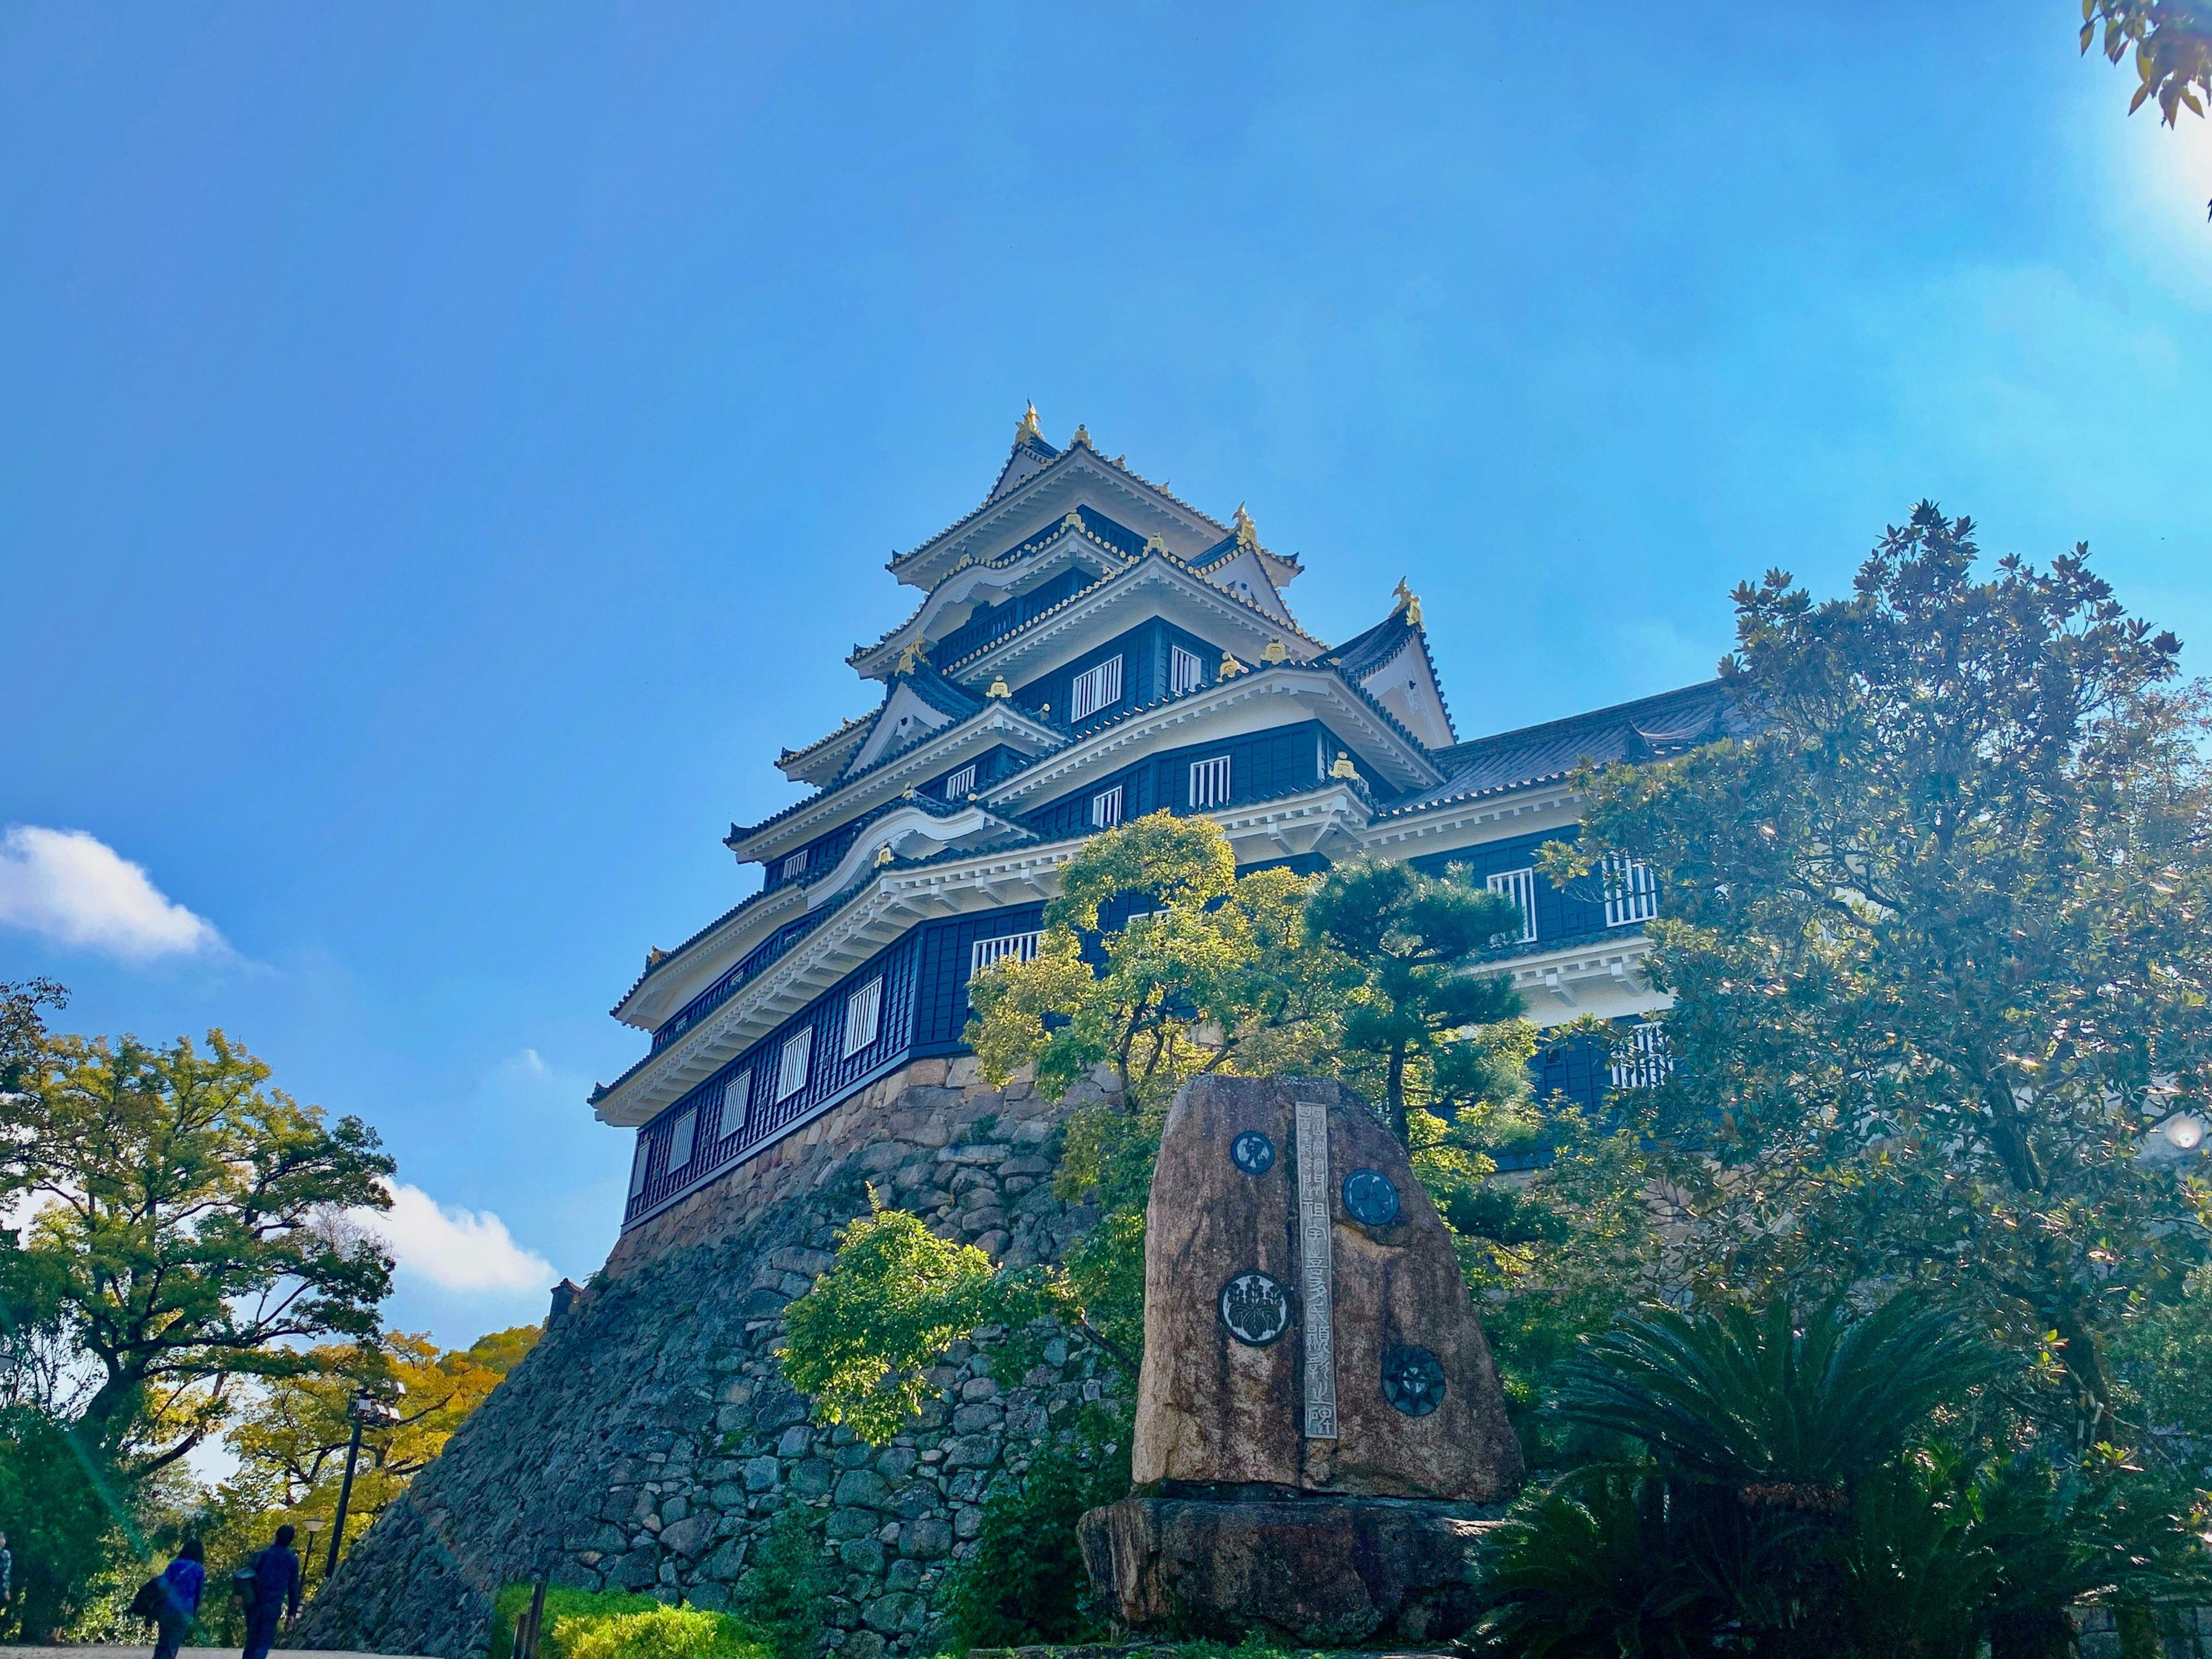 Let's visit Okayama Castle now!